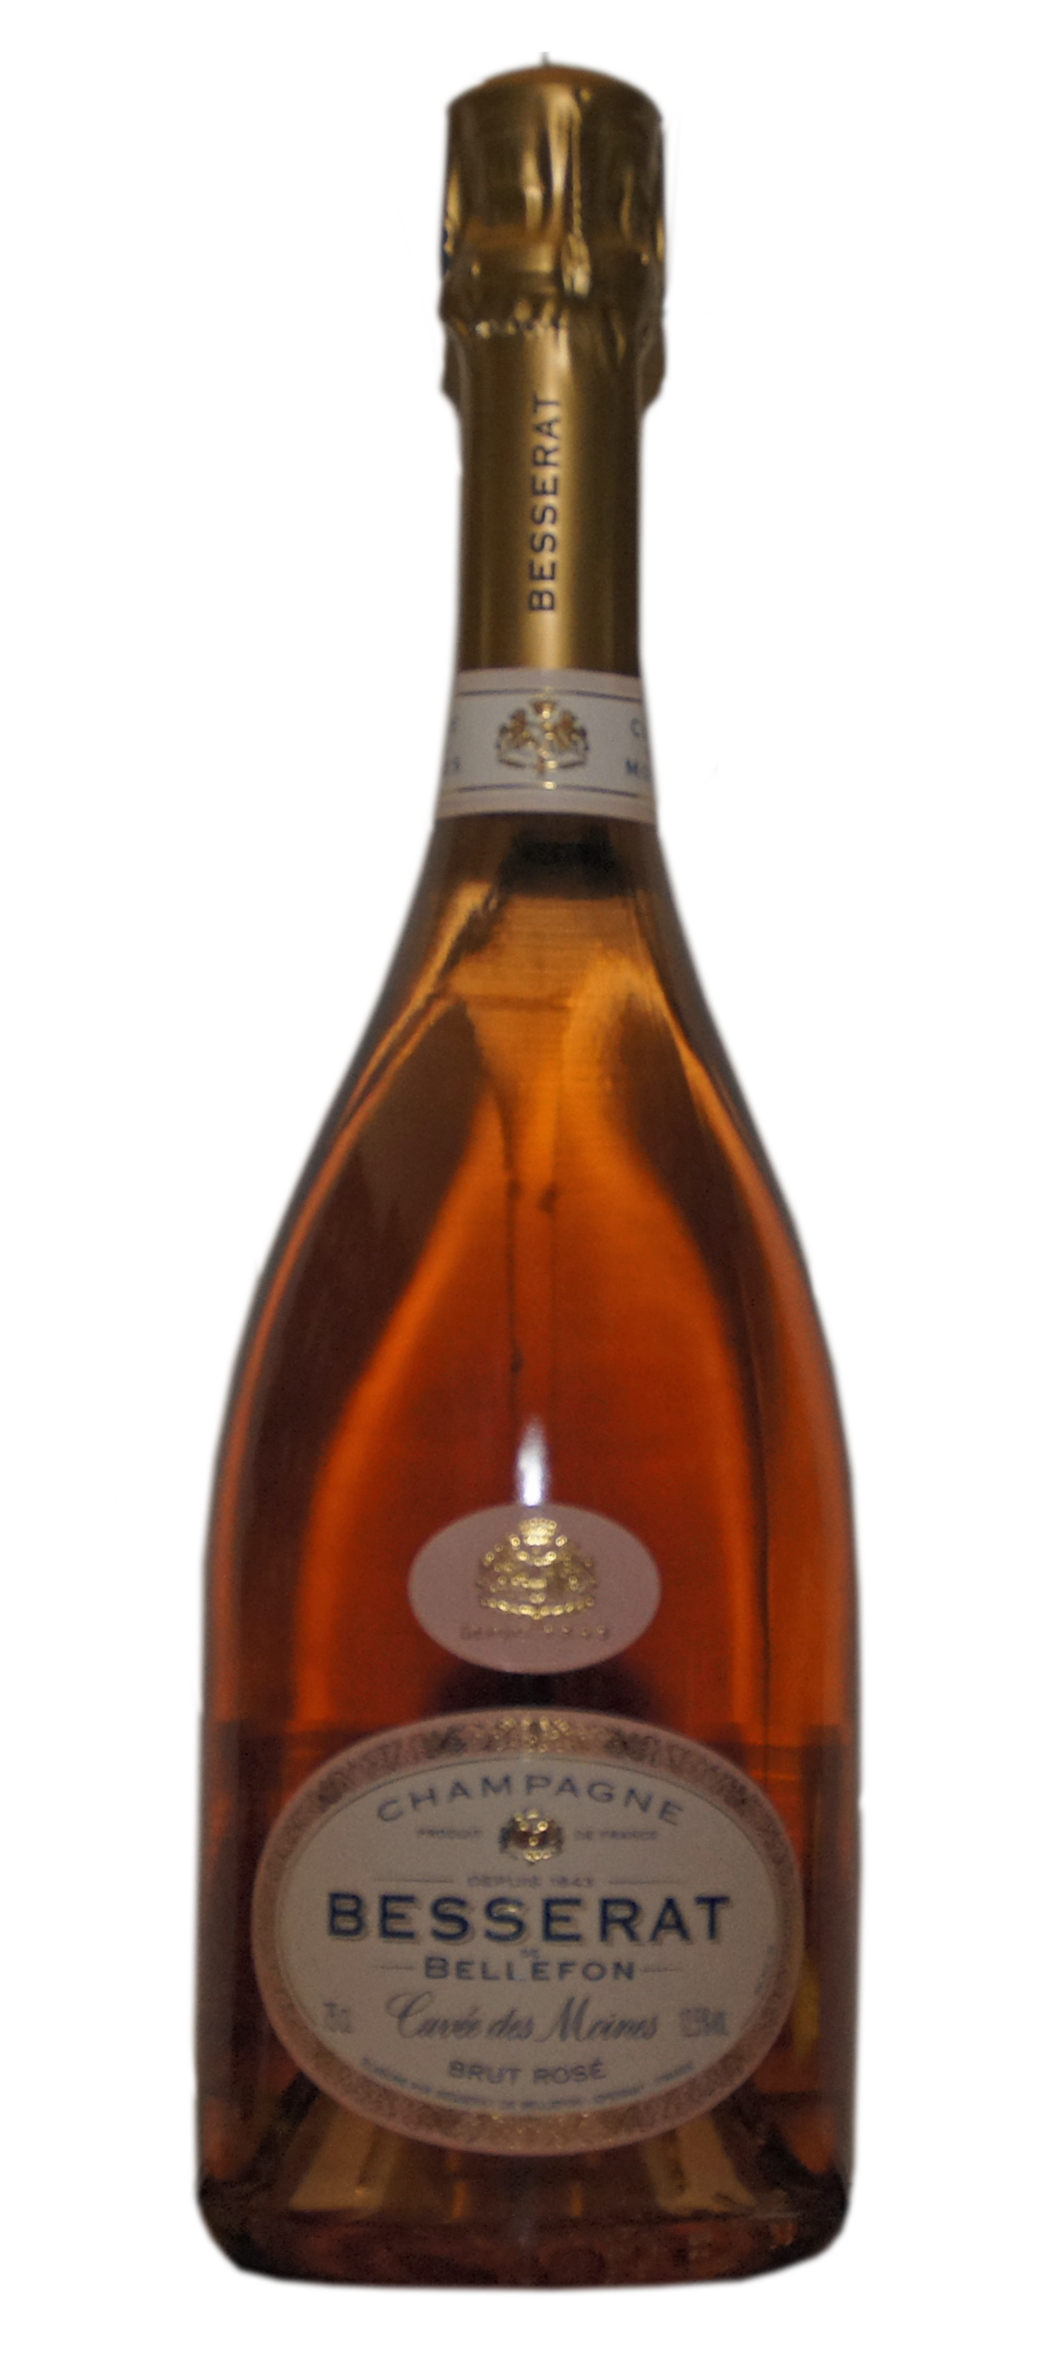 Champagne Cuveè des Moines, Brut, Rosè, 0,375l, Be